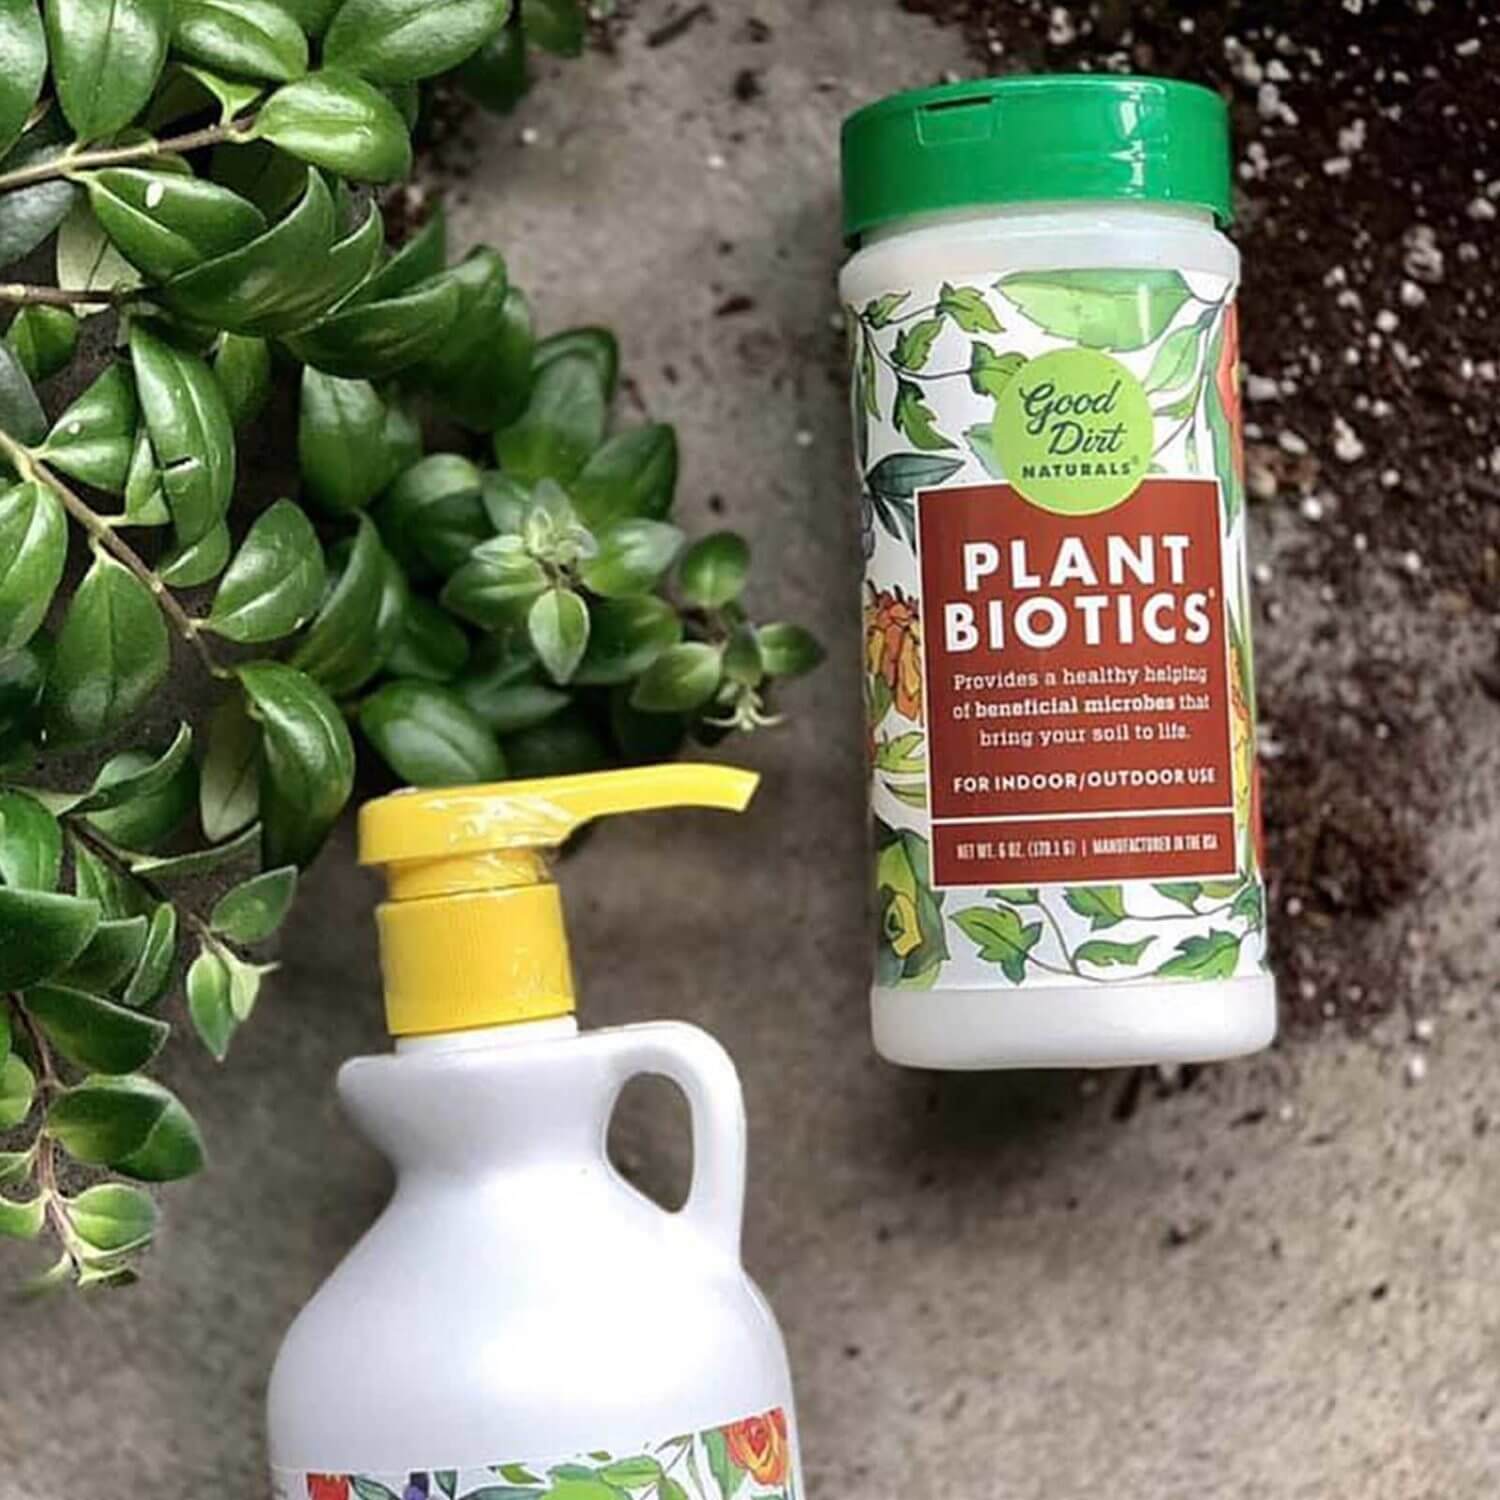 Good Dirt Plant Biotics Packaging Design